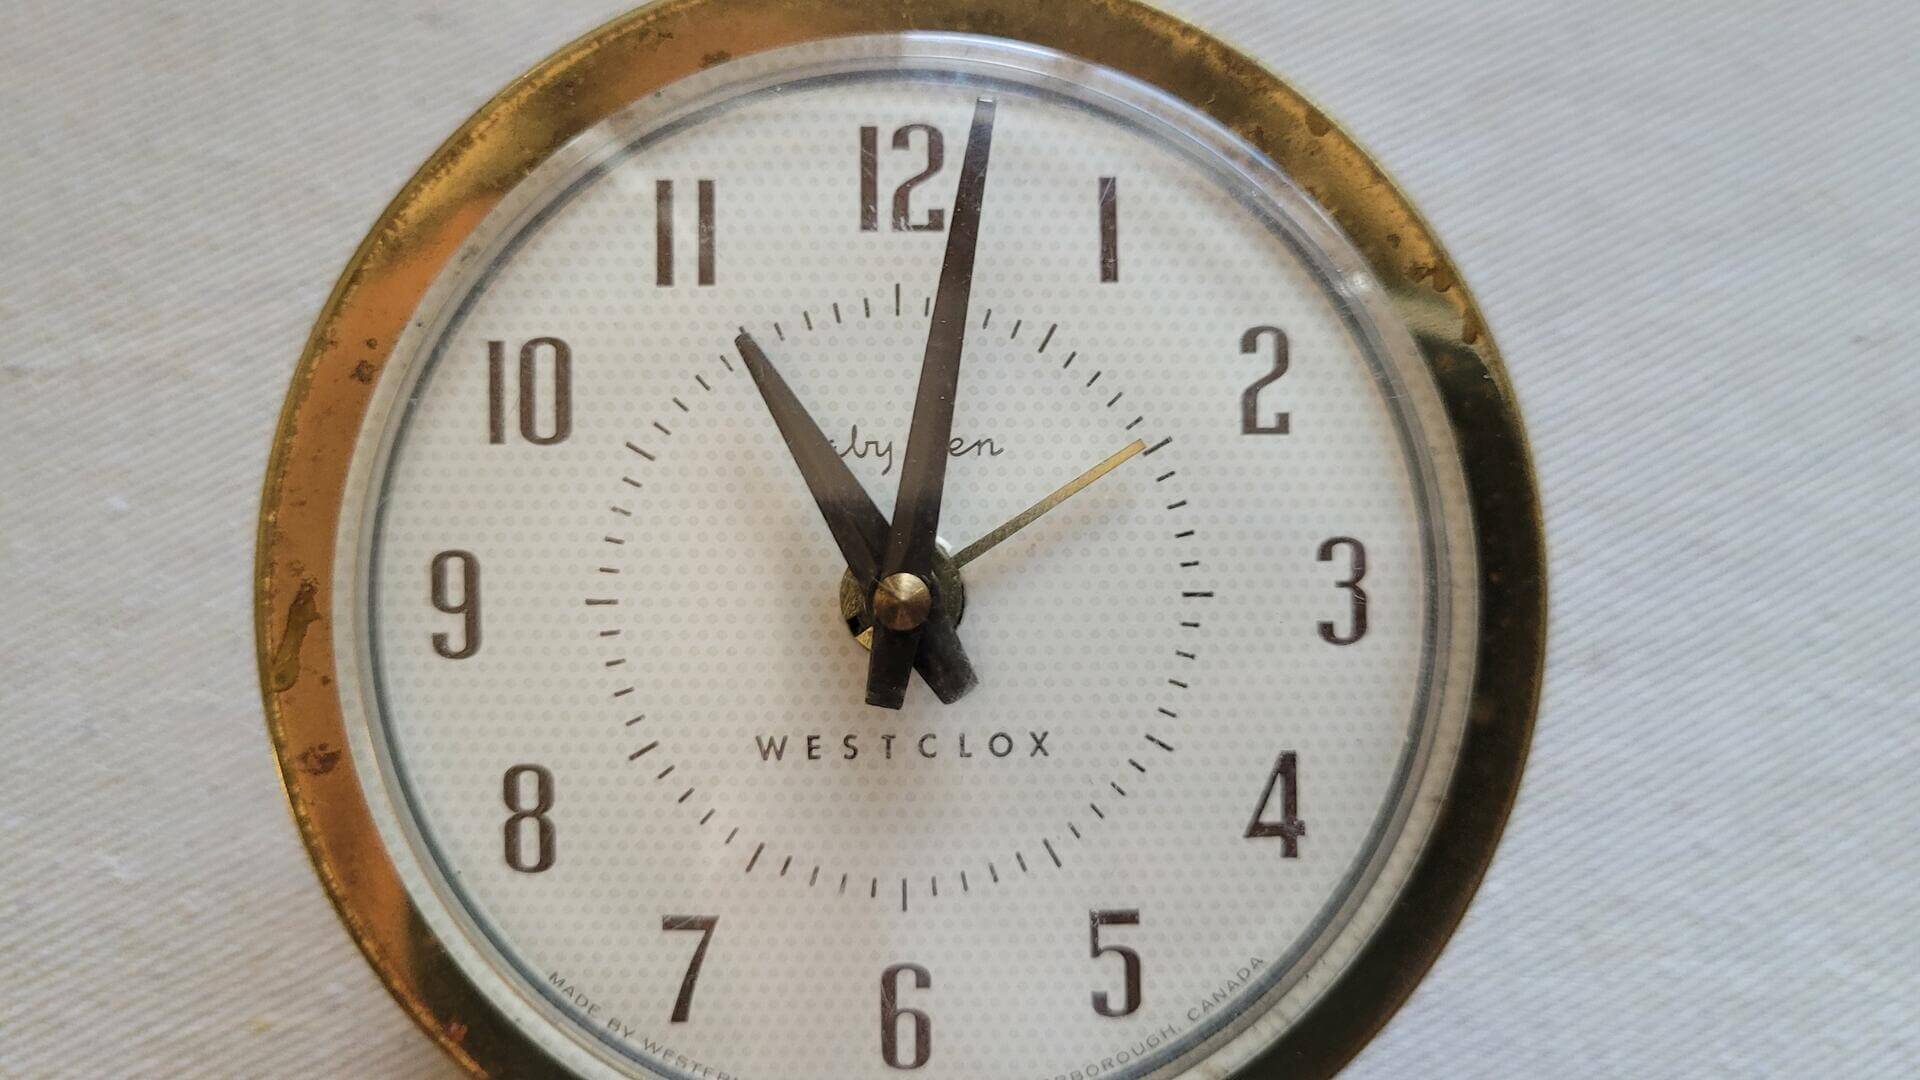 Nice vintage Westclock Baby Ben wind up metal alarm clock by Western Clock Co. Retro mid century made in Canada collectible mechanical clocks